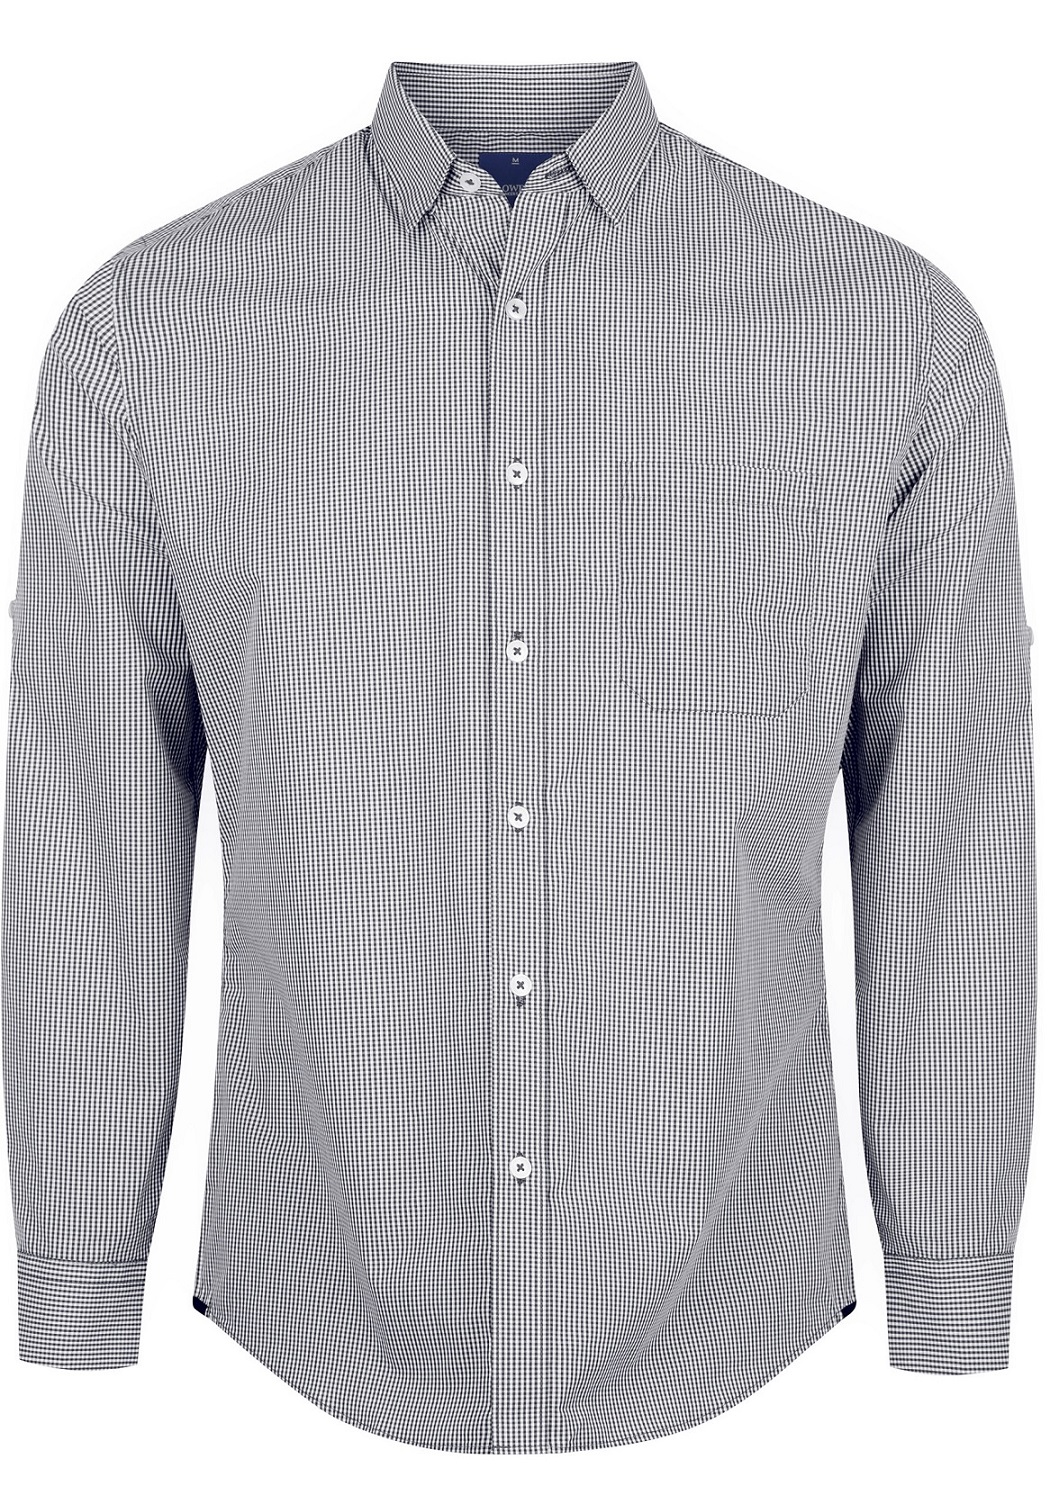 Gloweave Slim Fit Shirt Mini Gingham Check Buy Online Now